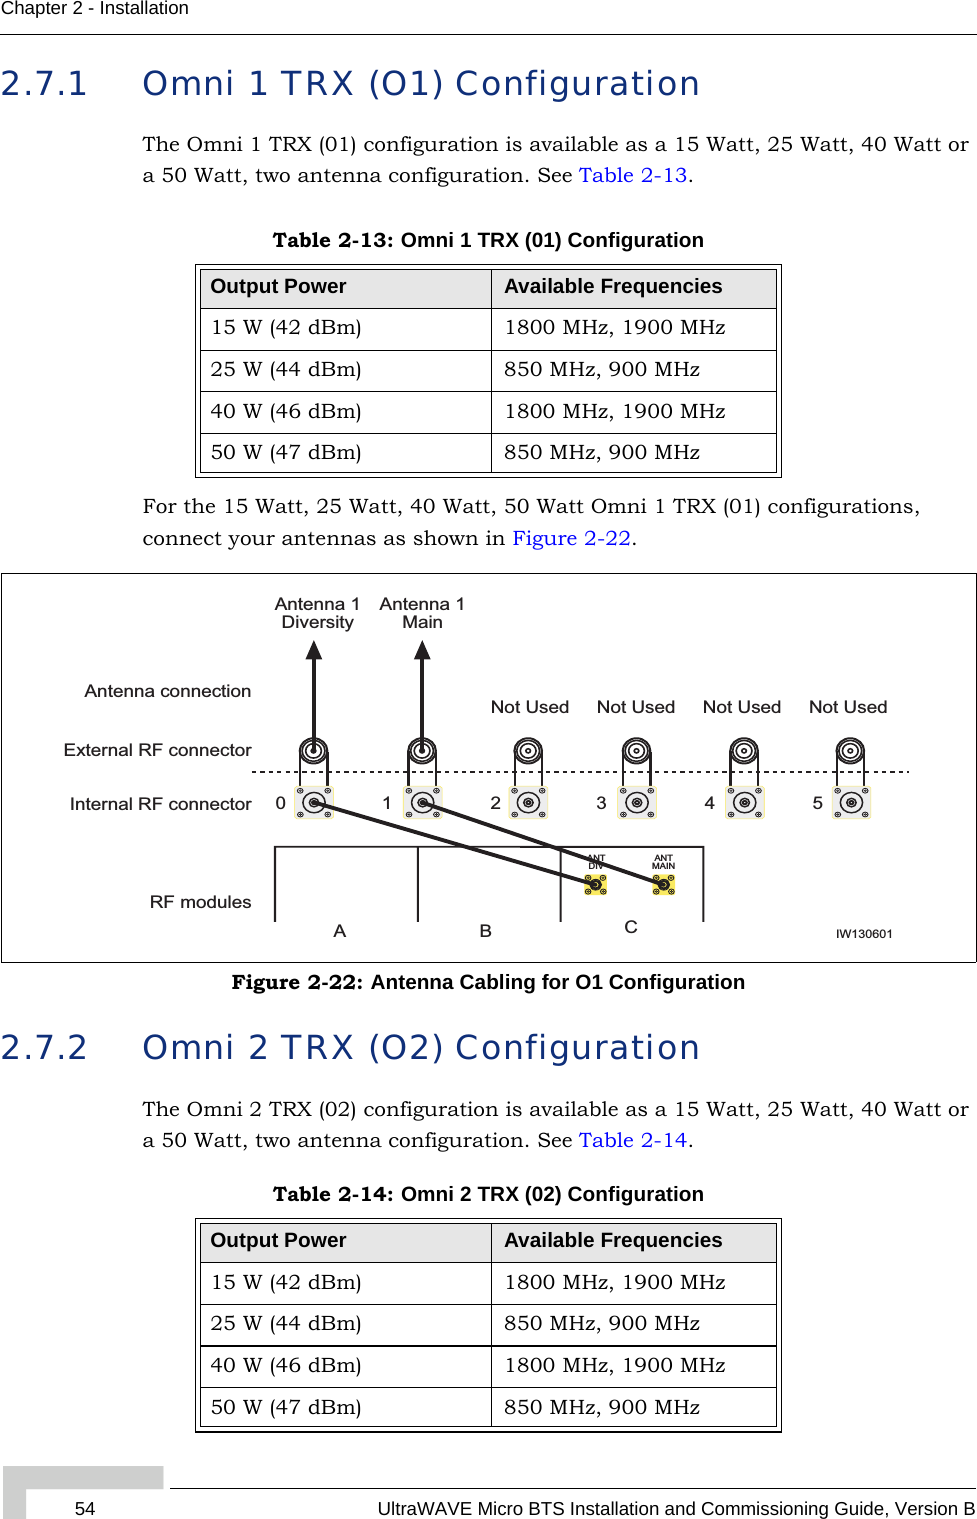 54 UltraWAVE Micro BTS Installation and Commissioning Guide, Version BChapter 2 - Installation2.7.1 Omni 1 TRX (O1) ConfigurationThe Omni 1 TRX (01) configuration is available as a 15 Watt, 25 Watt, 40 Watt or a 50 Watt, two antenna configuration. See Table 2-13.For the 15 Watt, 25 Watt, 40 Watt, 50 Watt Omni 1 TRX (01) configurations, connect your antennas as shown in Figure 2-22.2.7.2 Omni 2 TRX (O2) ConfigurationThe Omni 2 TRX (02) configuration is available as a 15 Watt, 25 Watt, 40 Watt or a 50 Watt, two antenna configuration. See Table 2-14.Table 2-13: Omni 1 TRX (01) ConfigurationOutput Power Available Frequencies15 W (42 dBm) 1800 MHz, 1900 MHz25 W (44 dBm) 850 MHz, 900 MHz40 W (46 dBm) 1800 MHz, 1900 MHz50 W (47 dBm) 850 MHz, 900 MHz/aFigure 2-22: Antenna Cabling for O1 ConfigurationTable 2-14: Omni 2 TRX (02) ConfigurationOutput Power Available Frequencies15 W (42 dBm) 1800 MHz, 1900 MHz25 W (44 dBm) 850 MHz, 900 MHz40 W (46 dBm) 1800 MHz, 1900 MHz50 W (47 dBm) 850 MHz, 900 MHzRF modulesIW130601ANTDIVANTMAINInternal RF connectorExternal RF connectorAntenna 1DiversityAntenna connection1 2 3 4 50Not UsedNot Used Not Used Not UsedAntenna 1MainABC